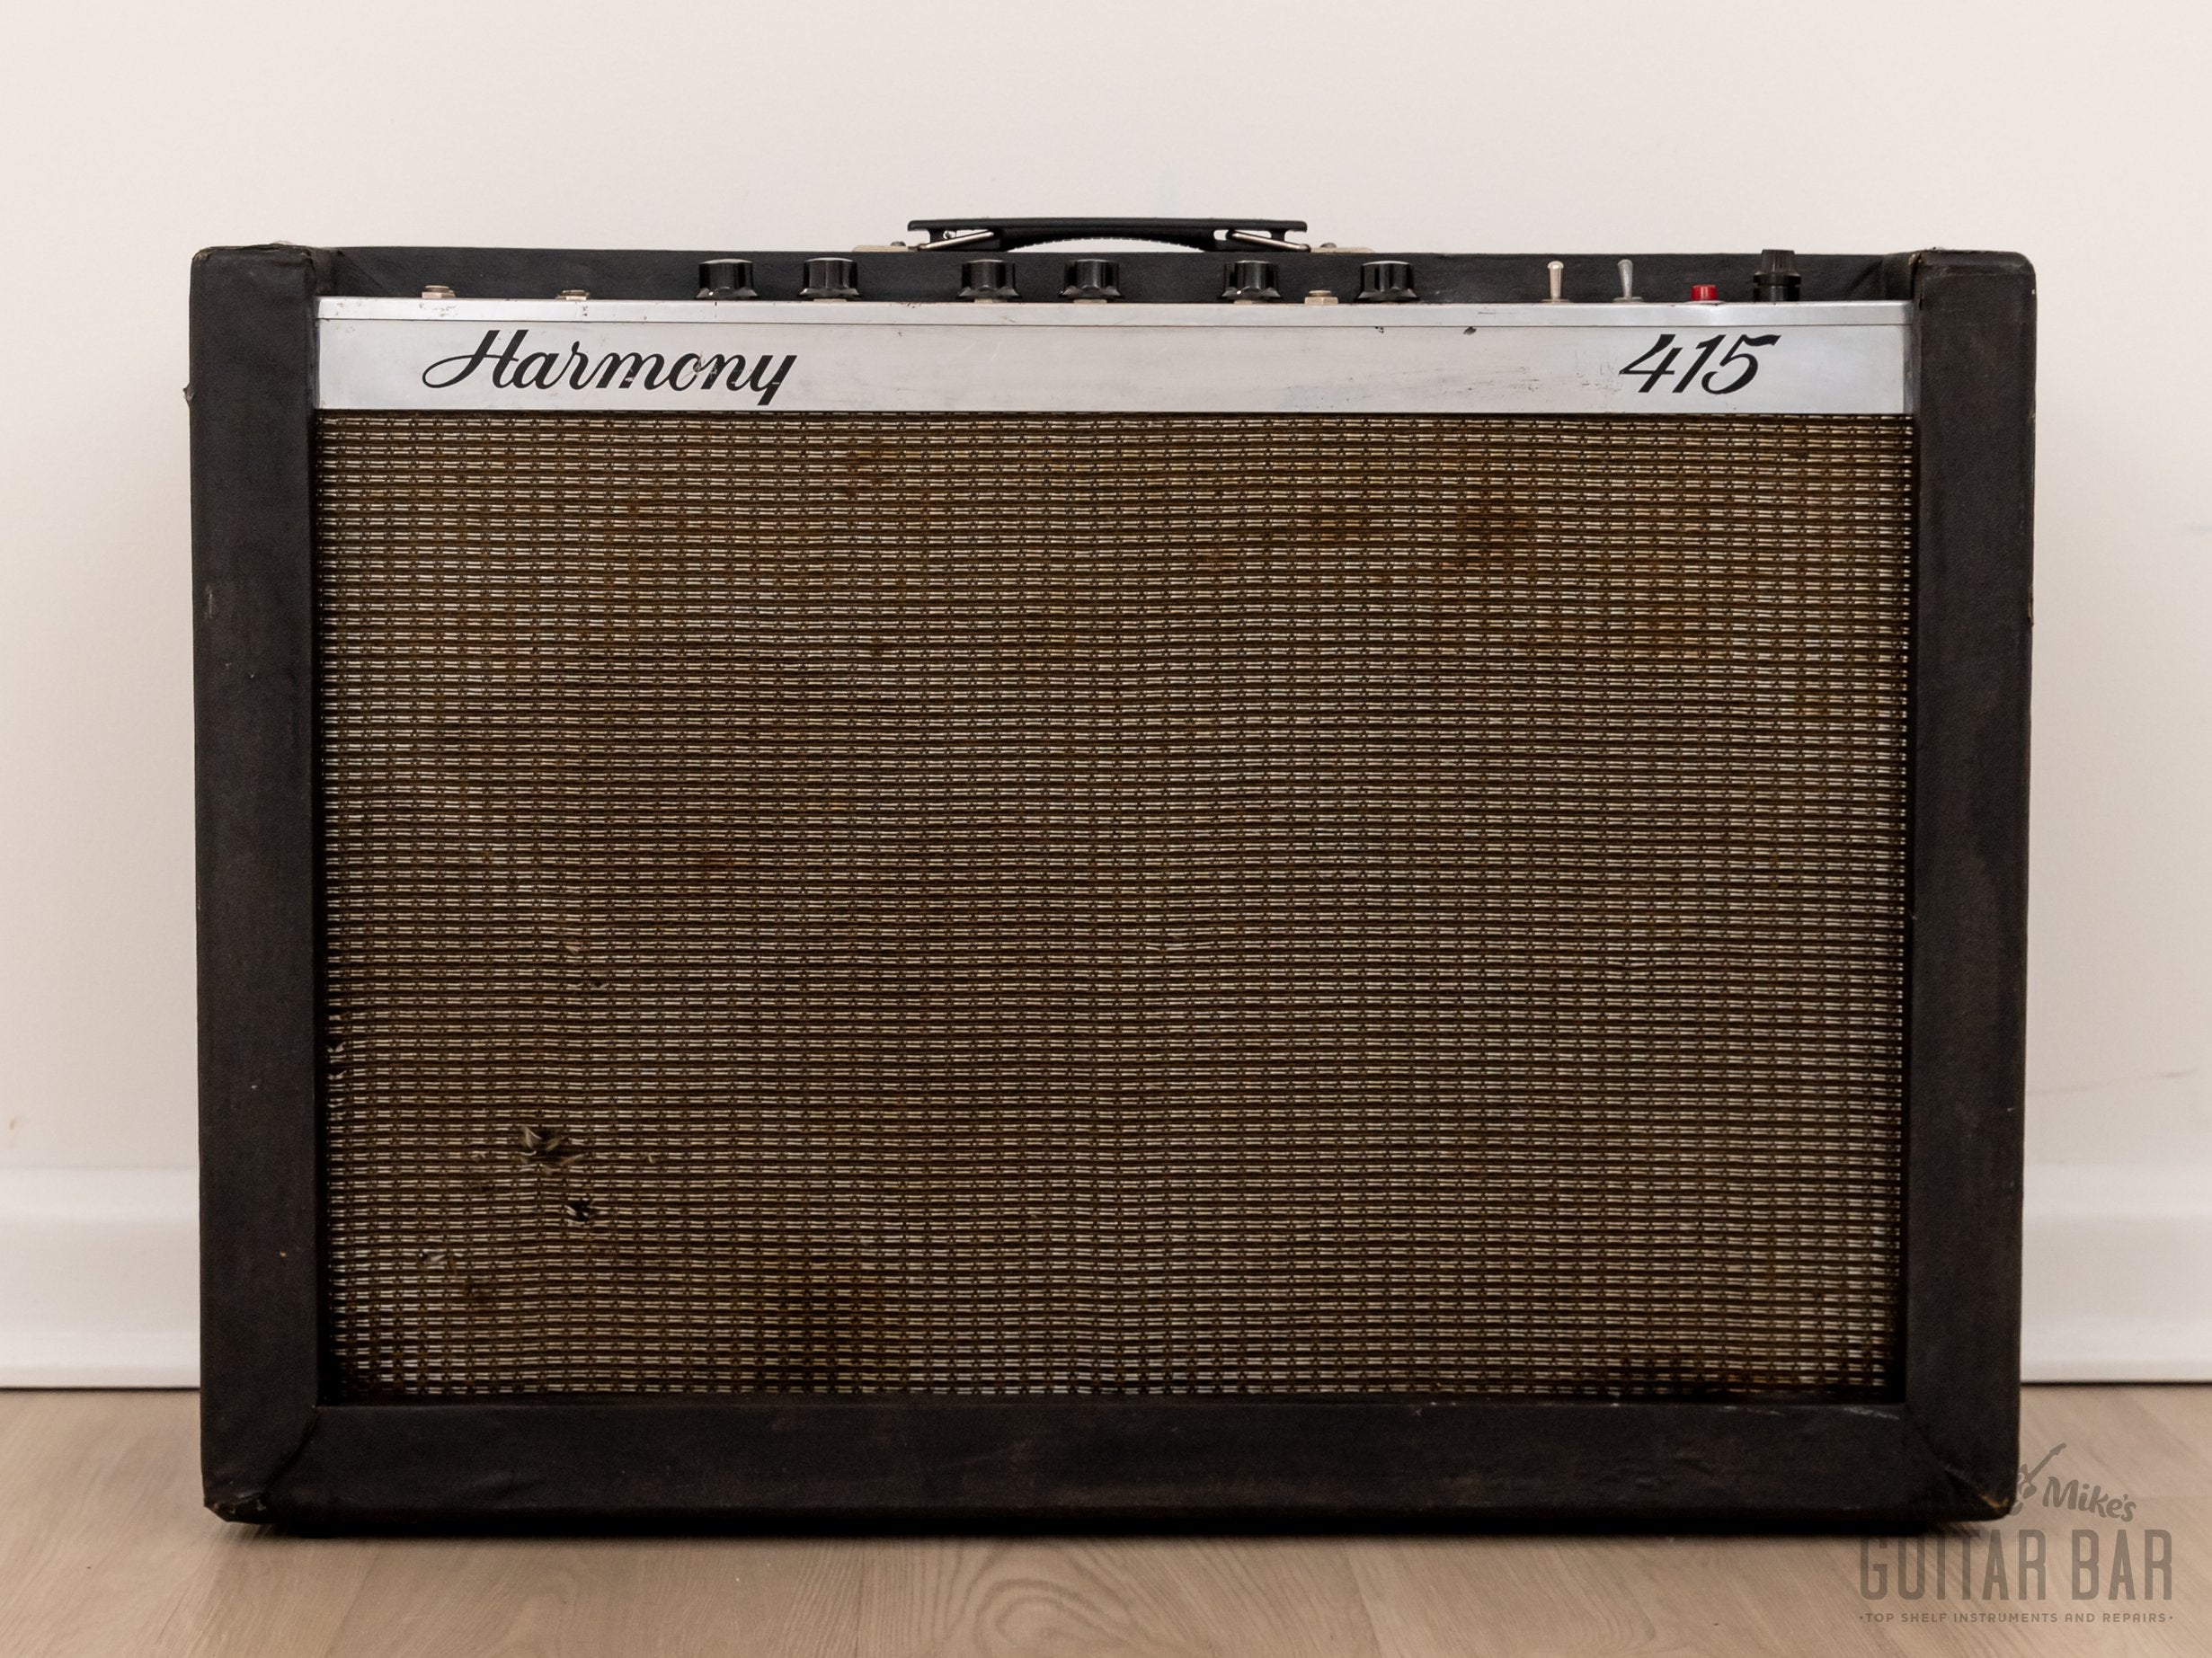 1966 Harmony H415 Valco-Made Vintage 2x12 Tube Amp w/ Tremolo & Jensen Speakers, Serviced